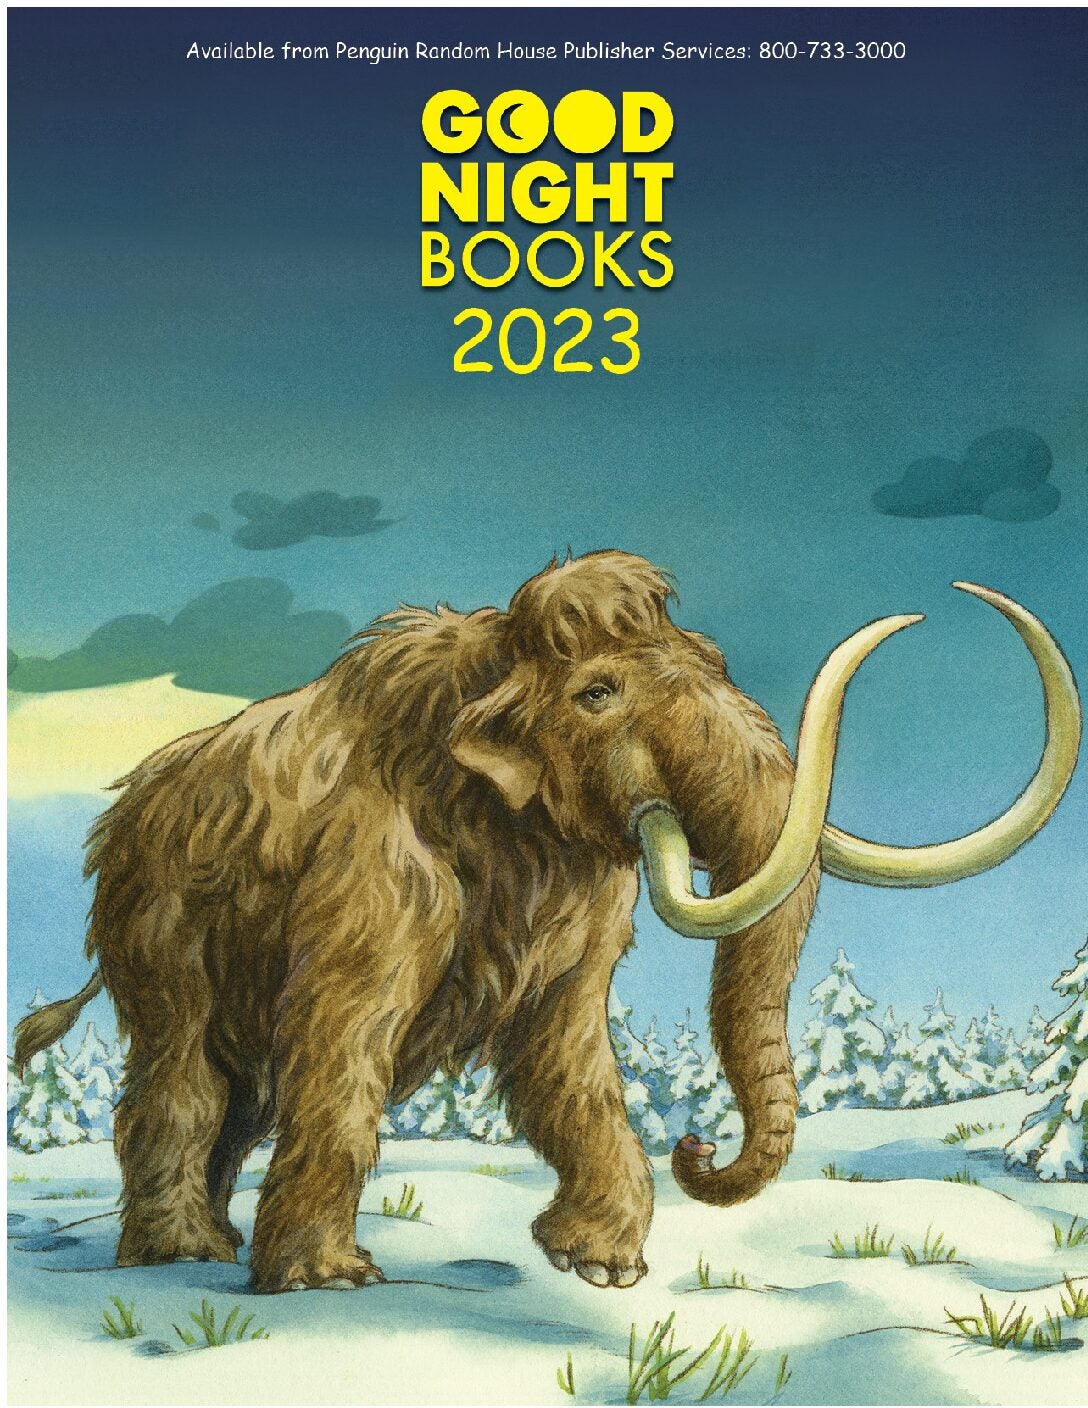 Good Night Books 2023 Catalog cover